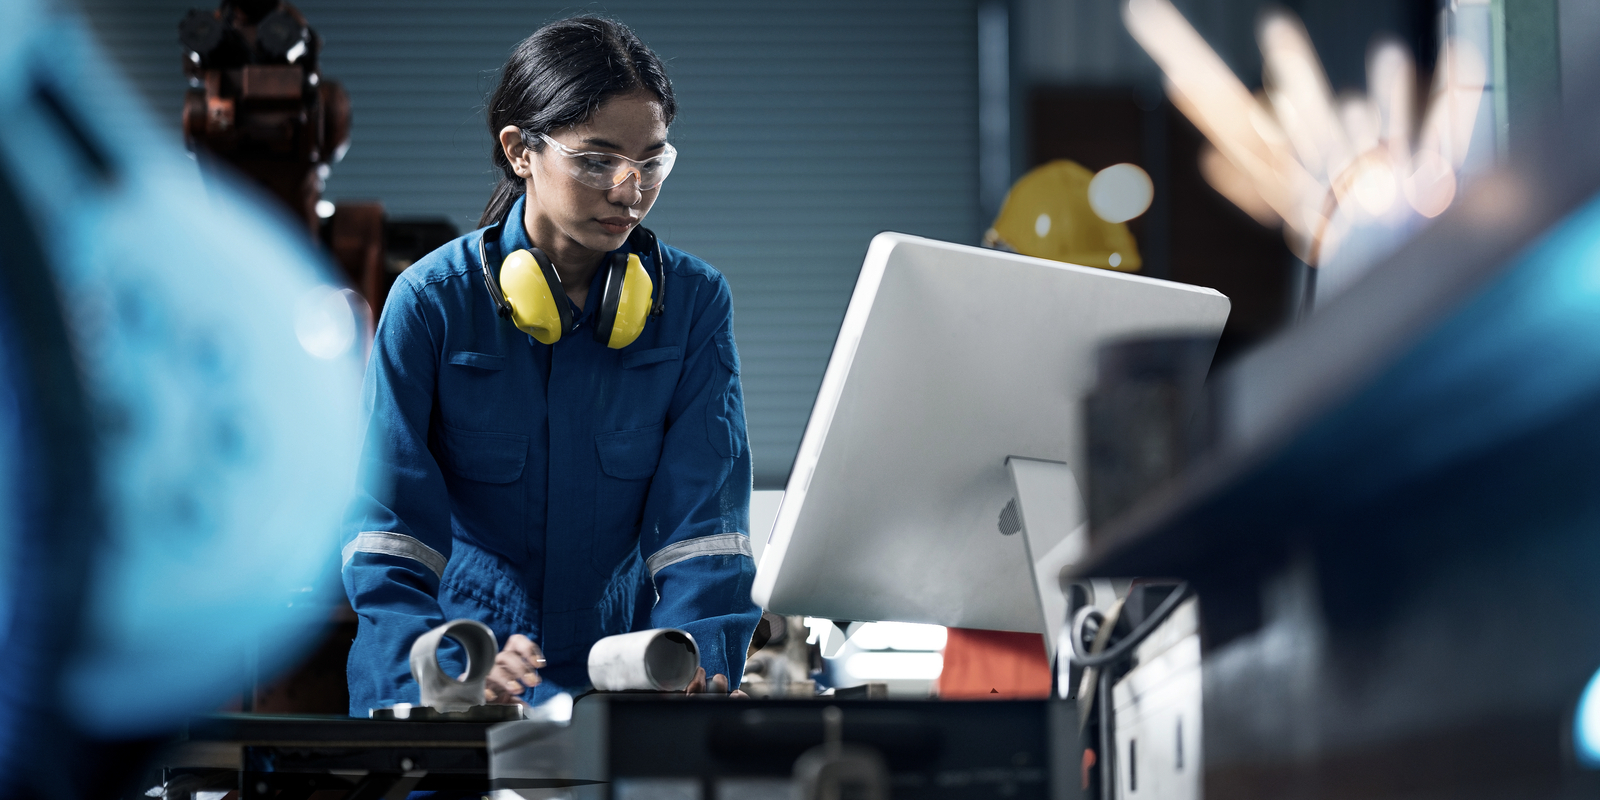 Female Industrial engineer working on desktop computer in robotic welding testing